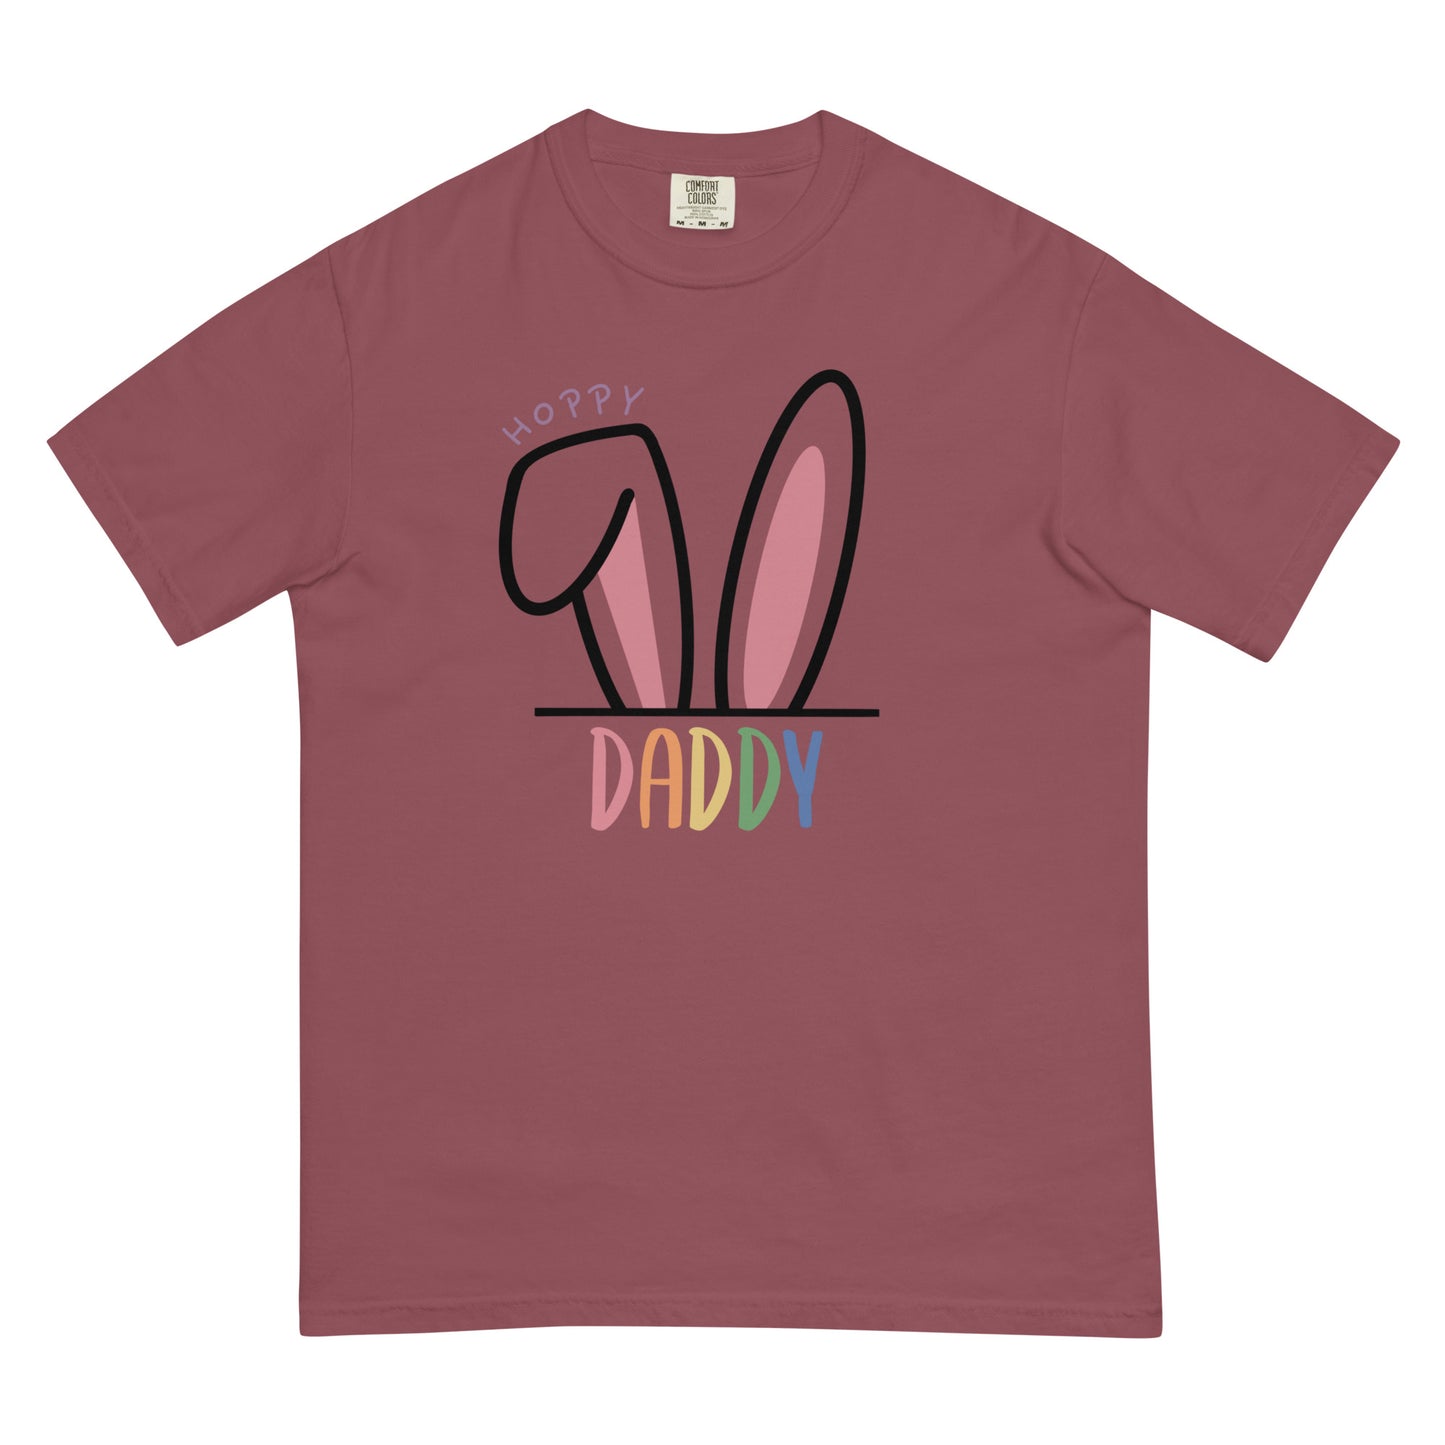 Hoppy Daddy Comfort Colors T-Shirt